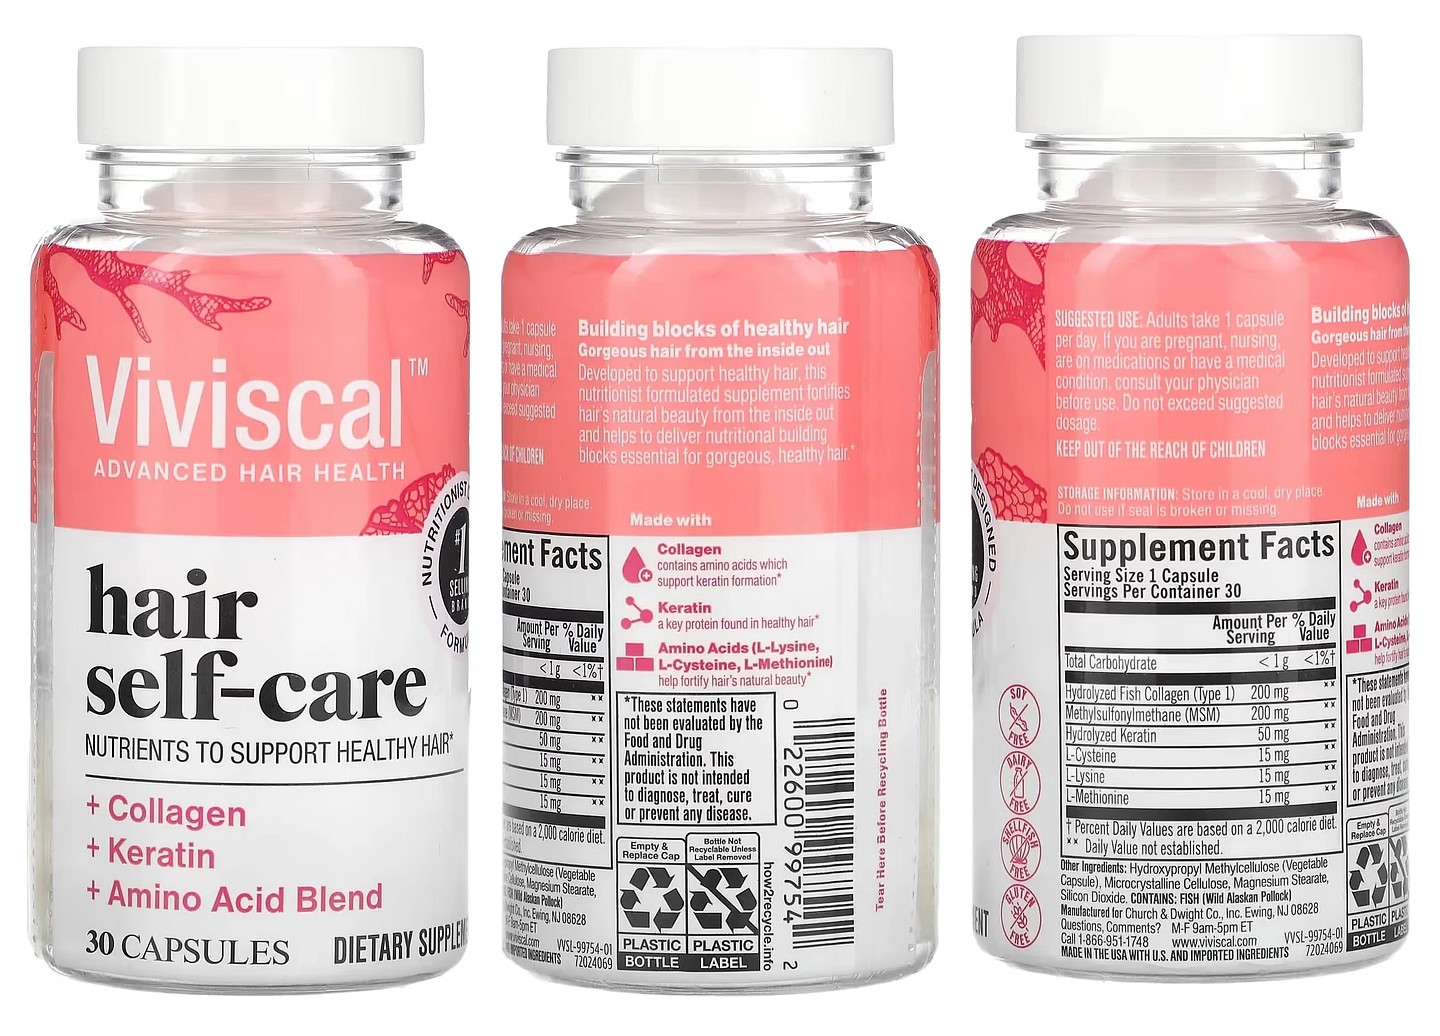 Viviscal, Hair Self-Care packaging